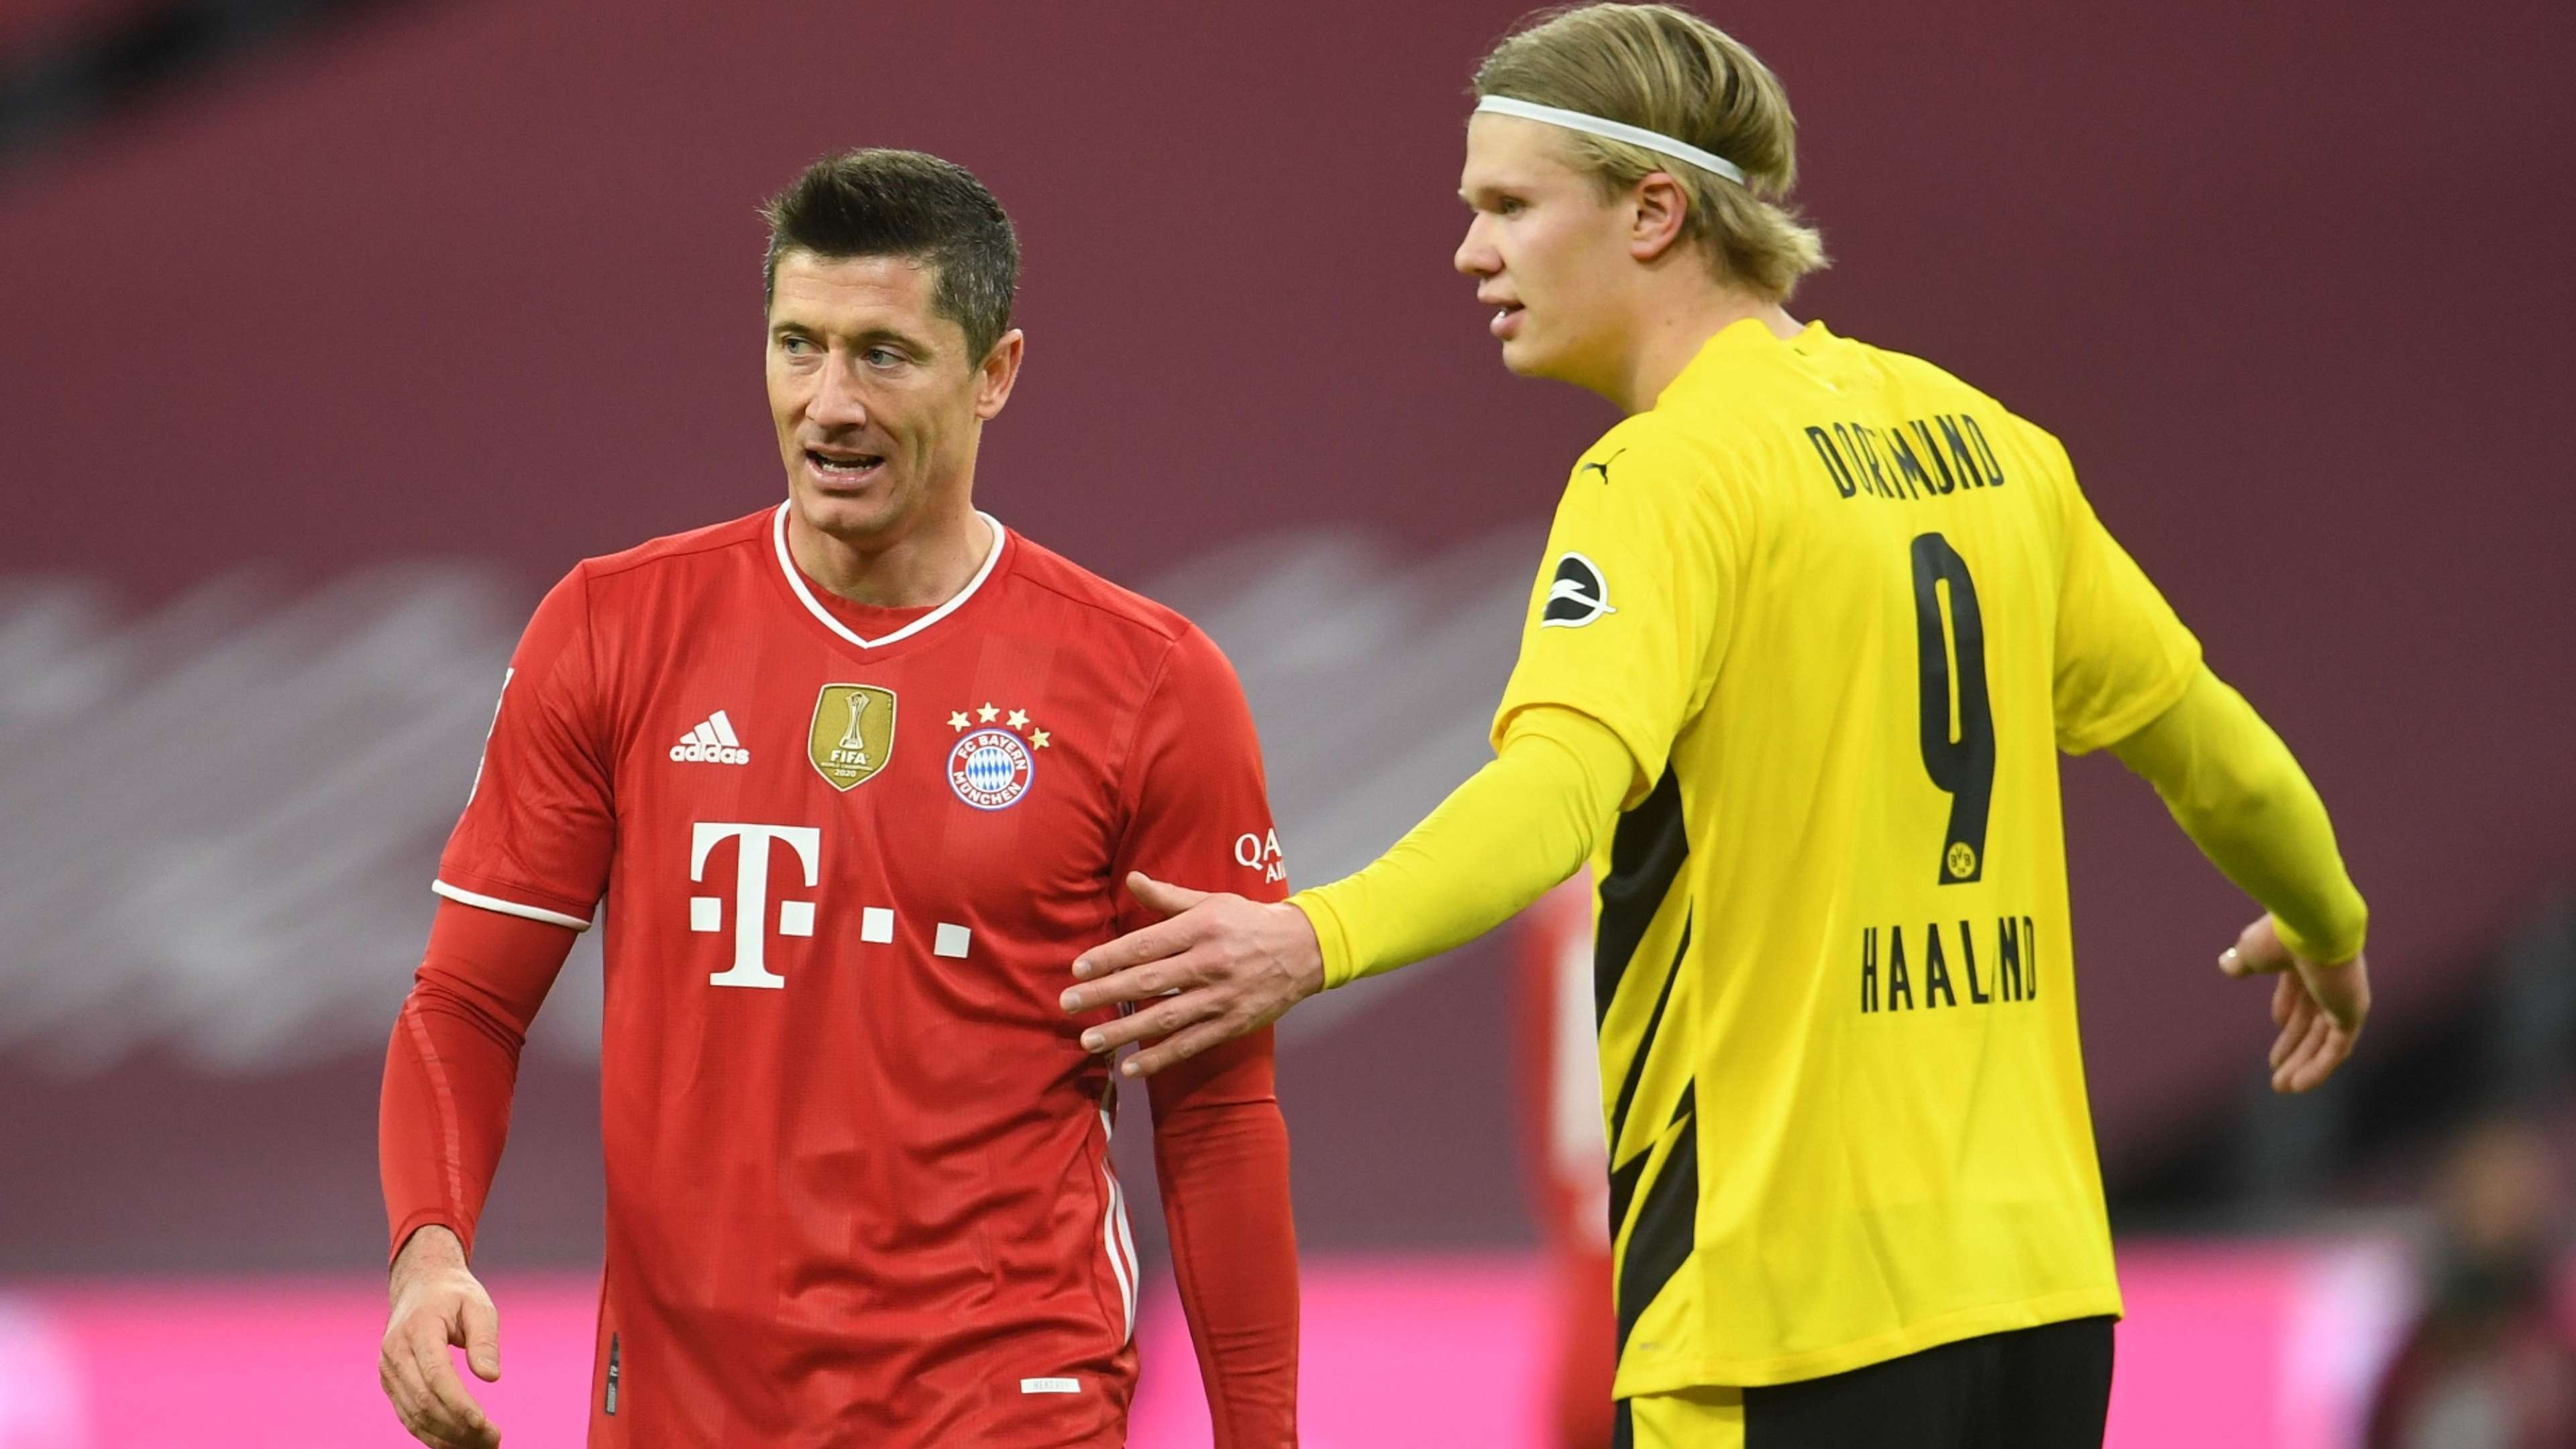 Robert Lewandowski Bayern Munich Erling Haaland Borussia Dortmund 2020-21